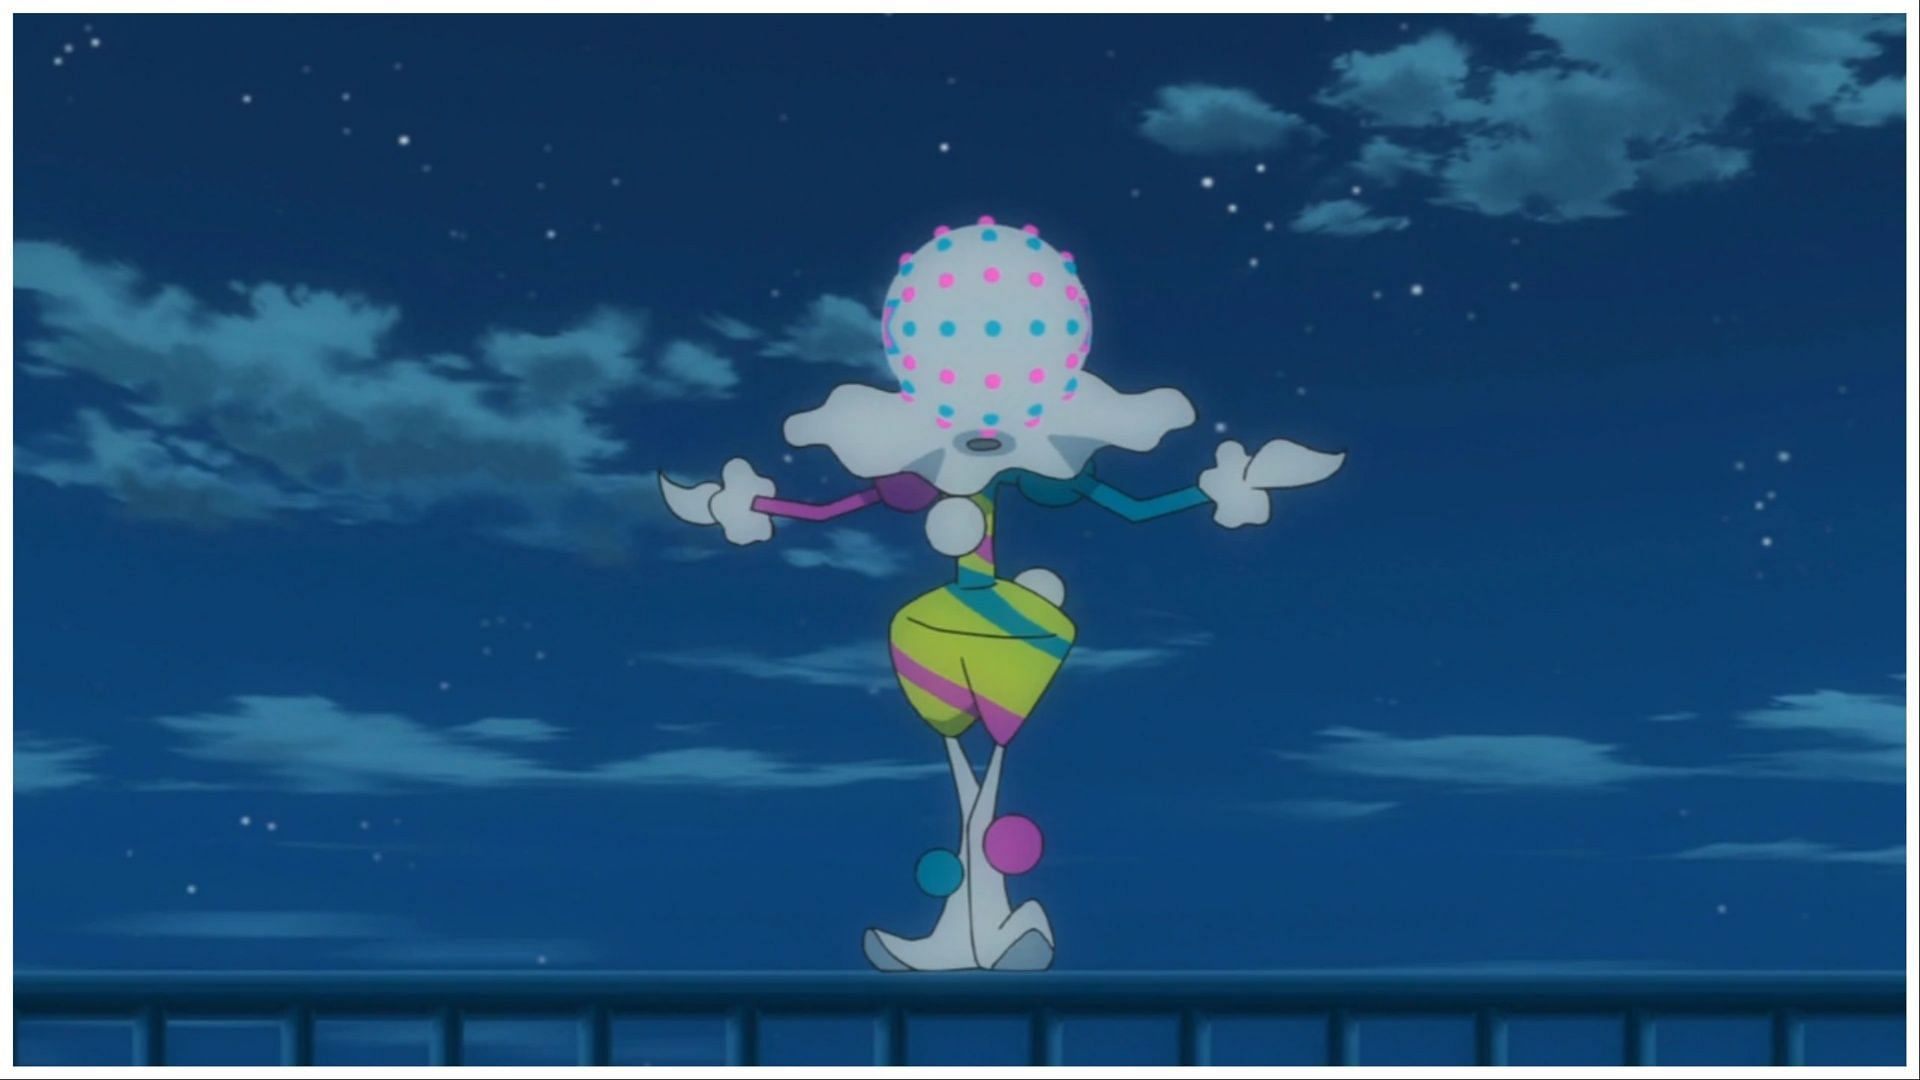 Blacephalon, as seen in the Pokemon anime (Image via The Pokemon Company)